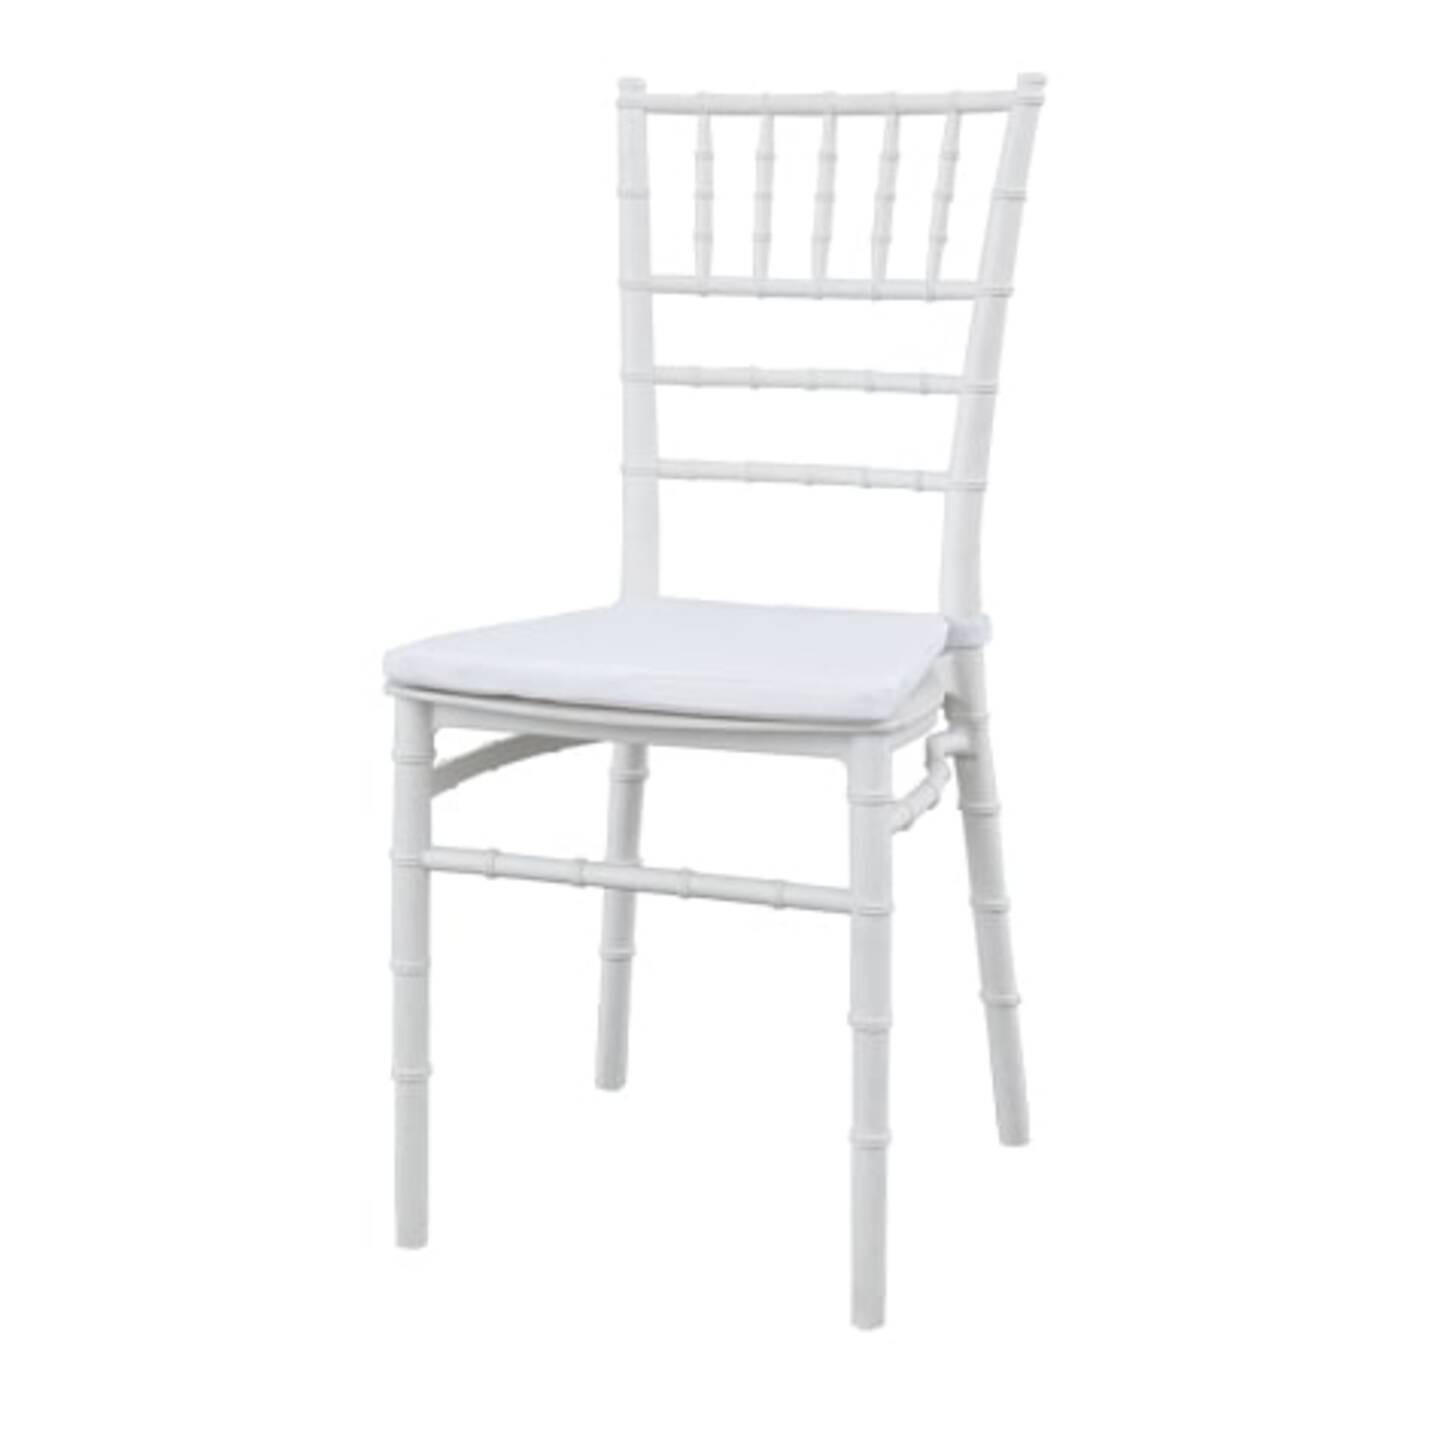 White Tiffany Chair Rental